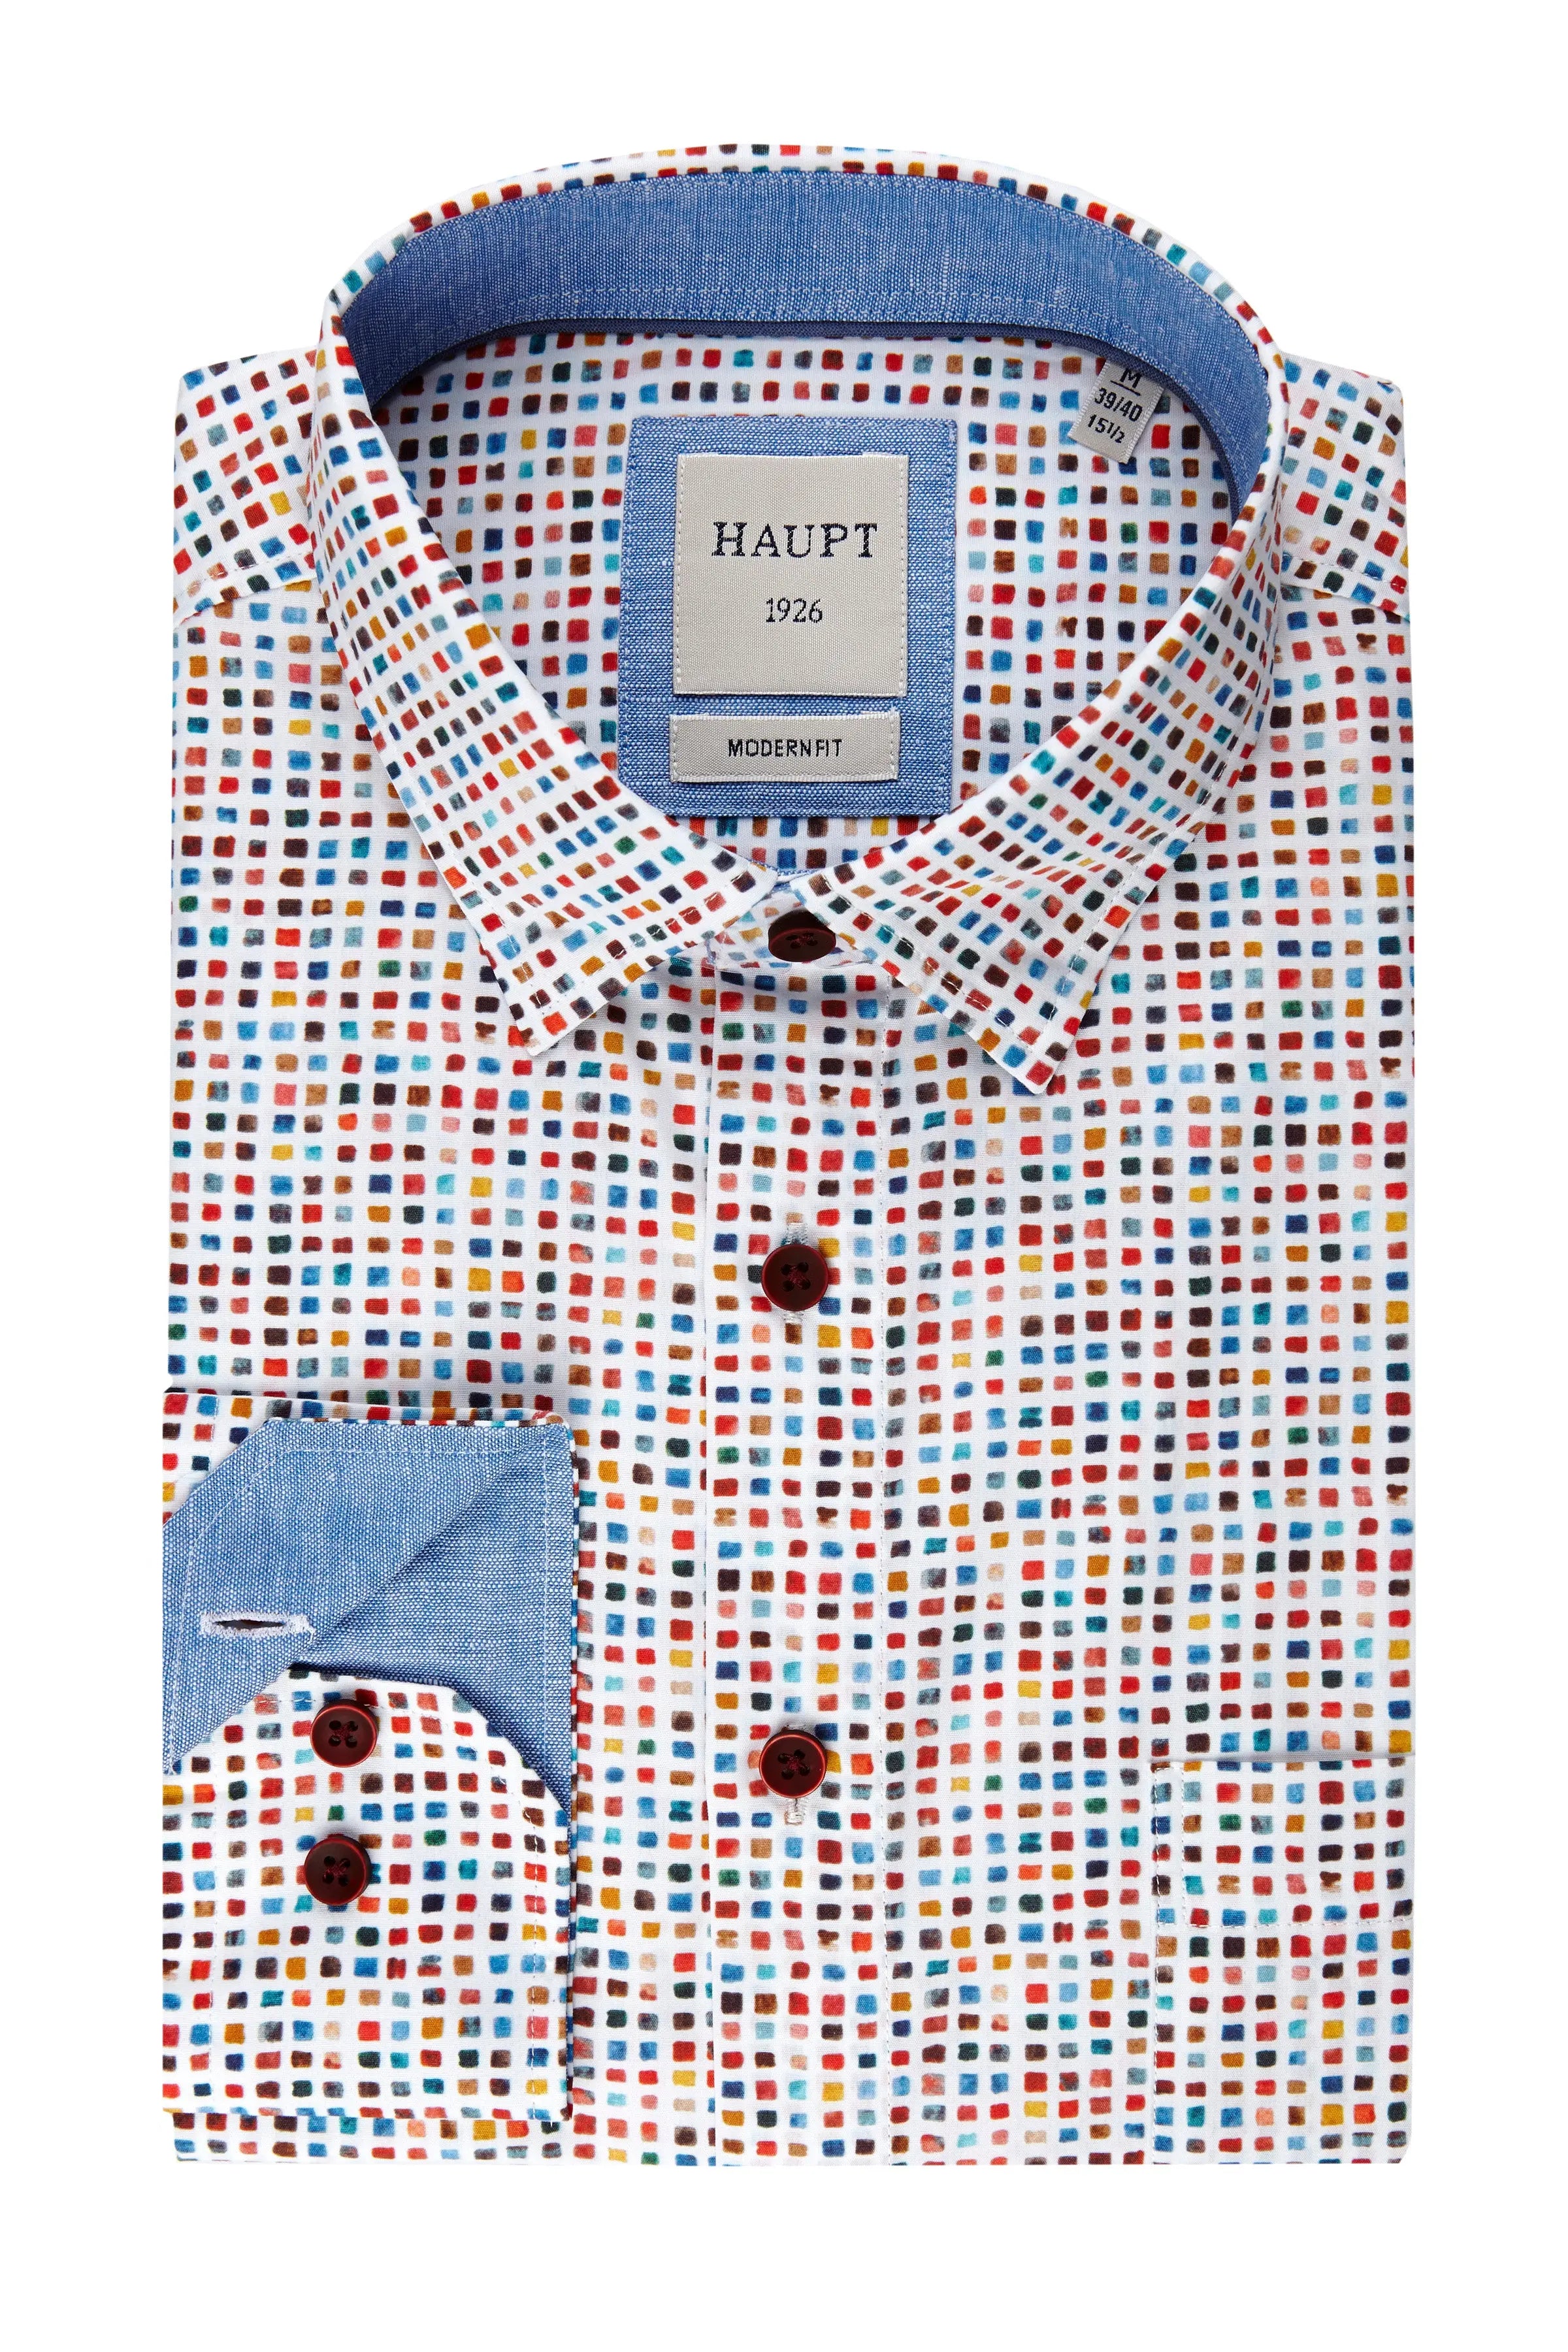 Baumwoll-Herrenhemd true blue print Haupt